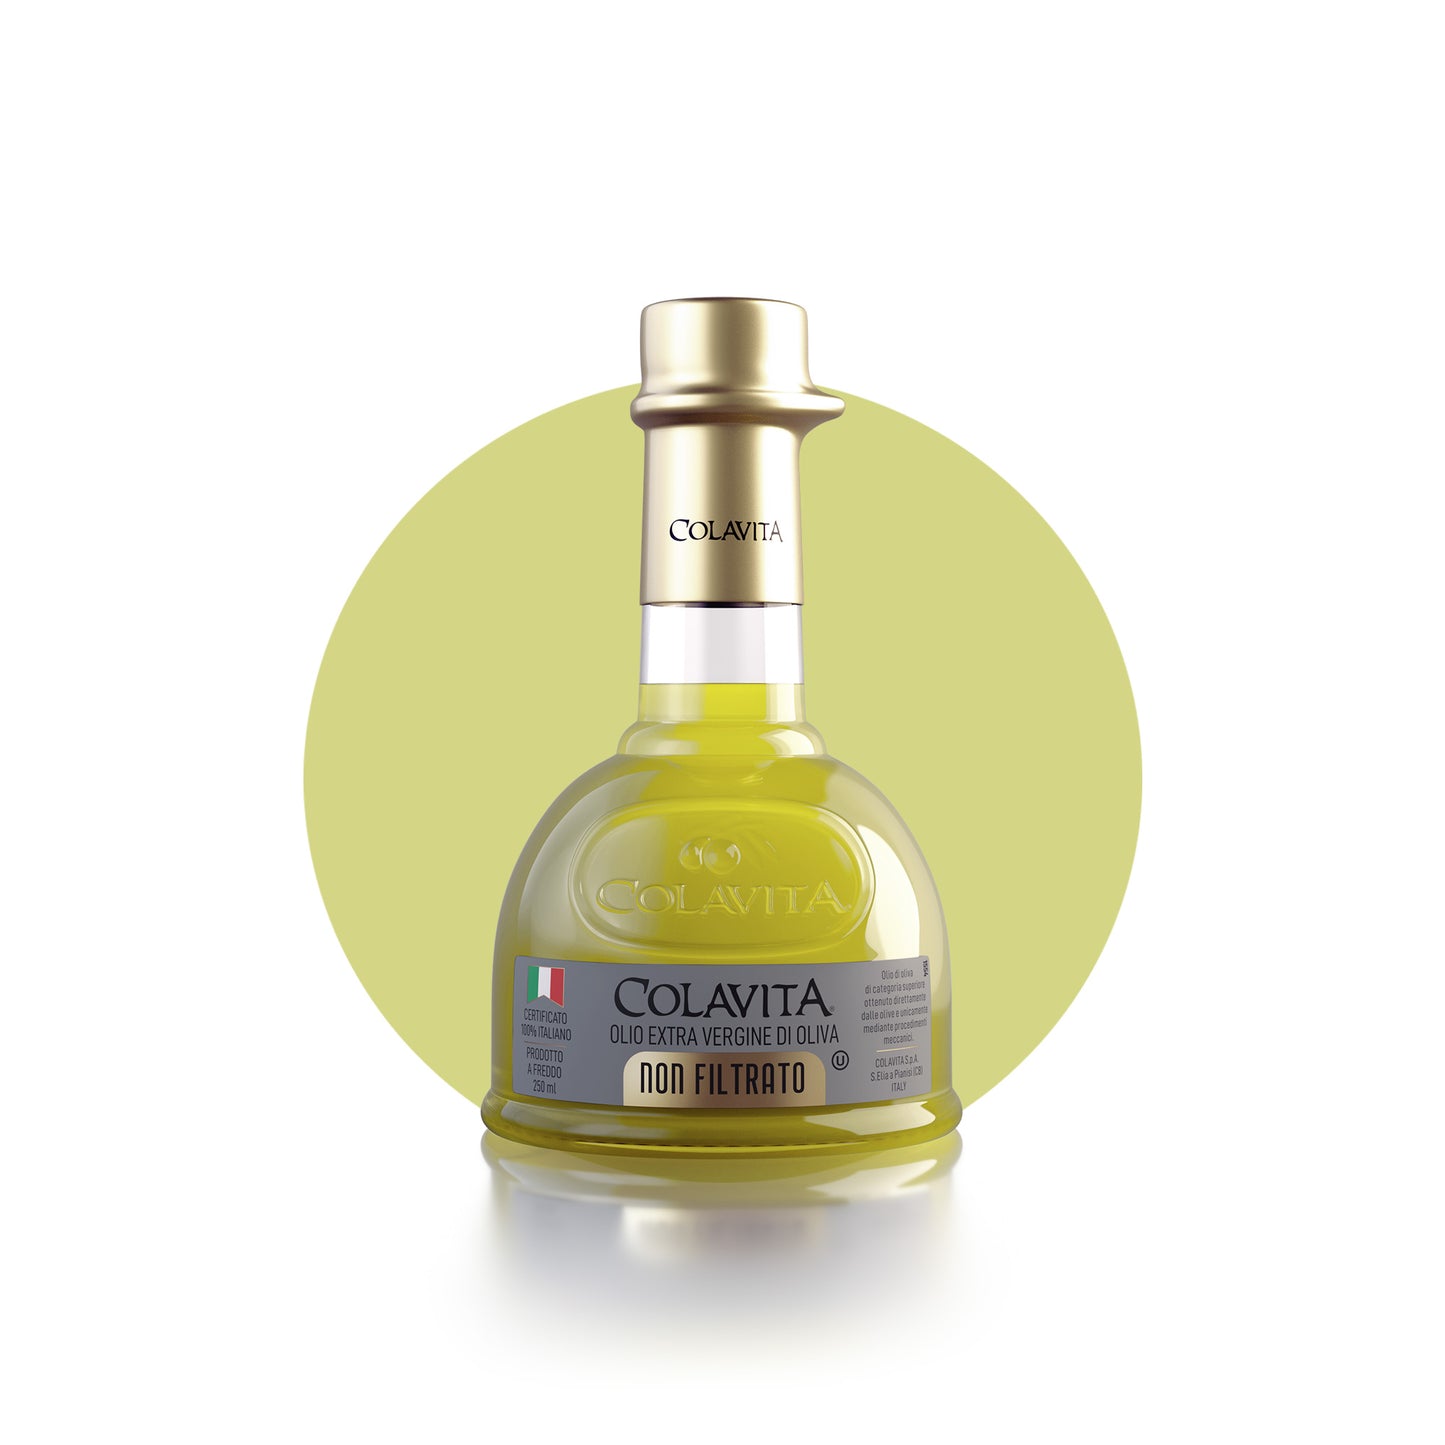 
                  
                    Unfiltered Extra Virgin Olive Oil
                  
                